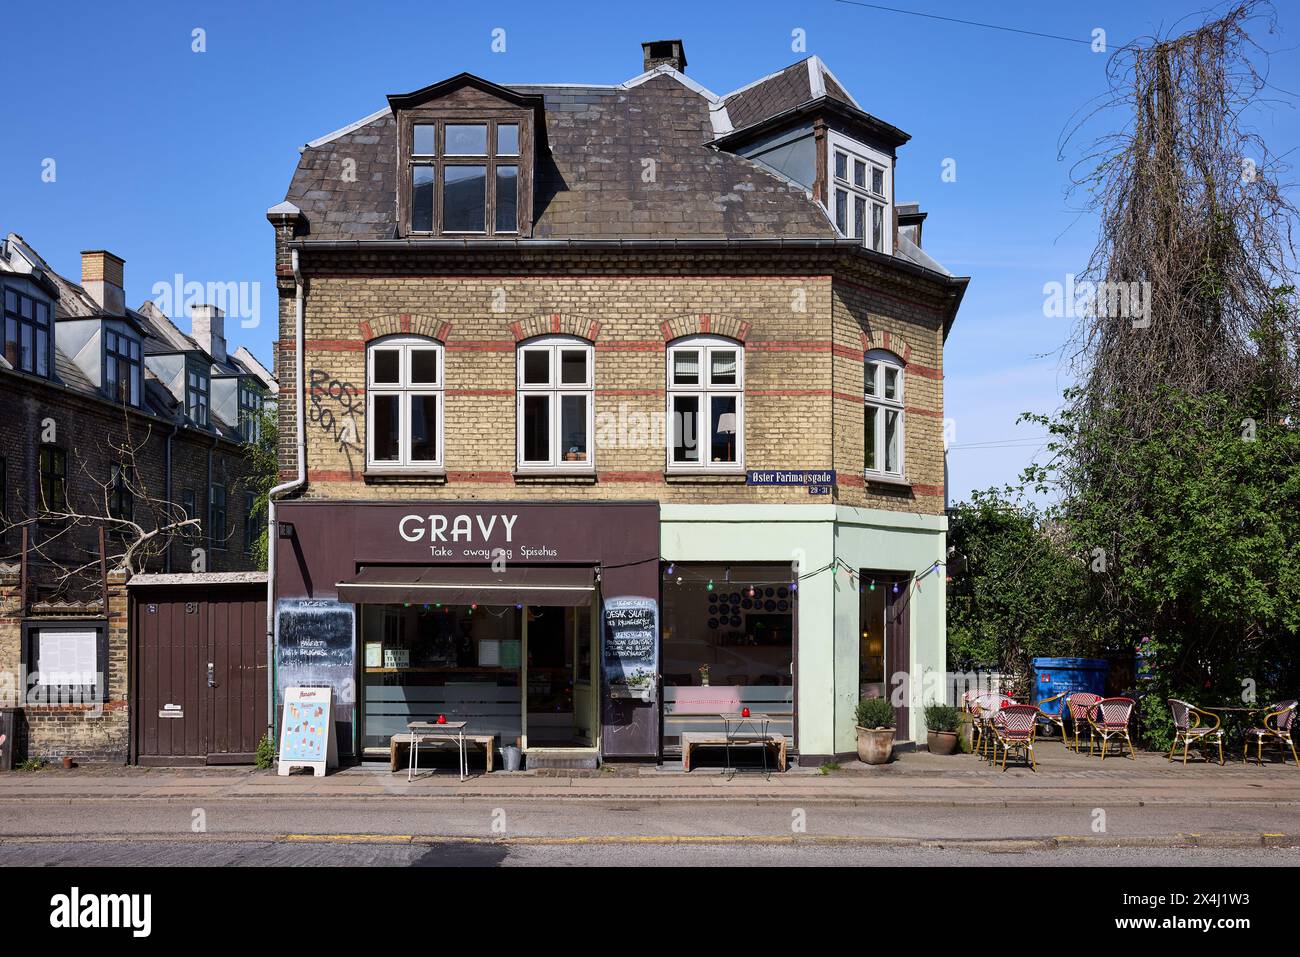 Gravy, small restaurant on Øster Farimagsgade, Copenhagen, Denmark Stock Photo